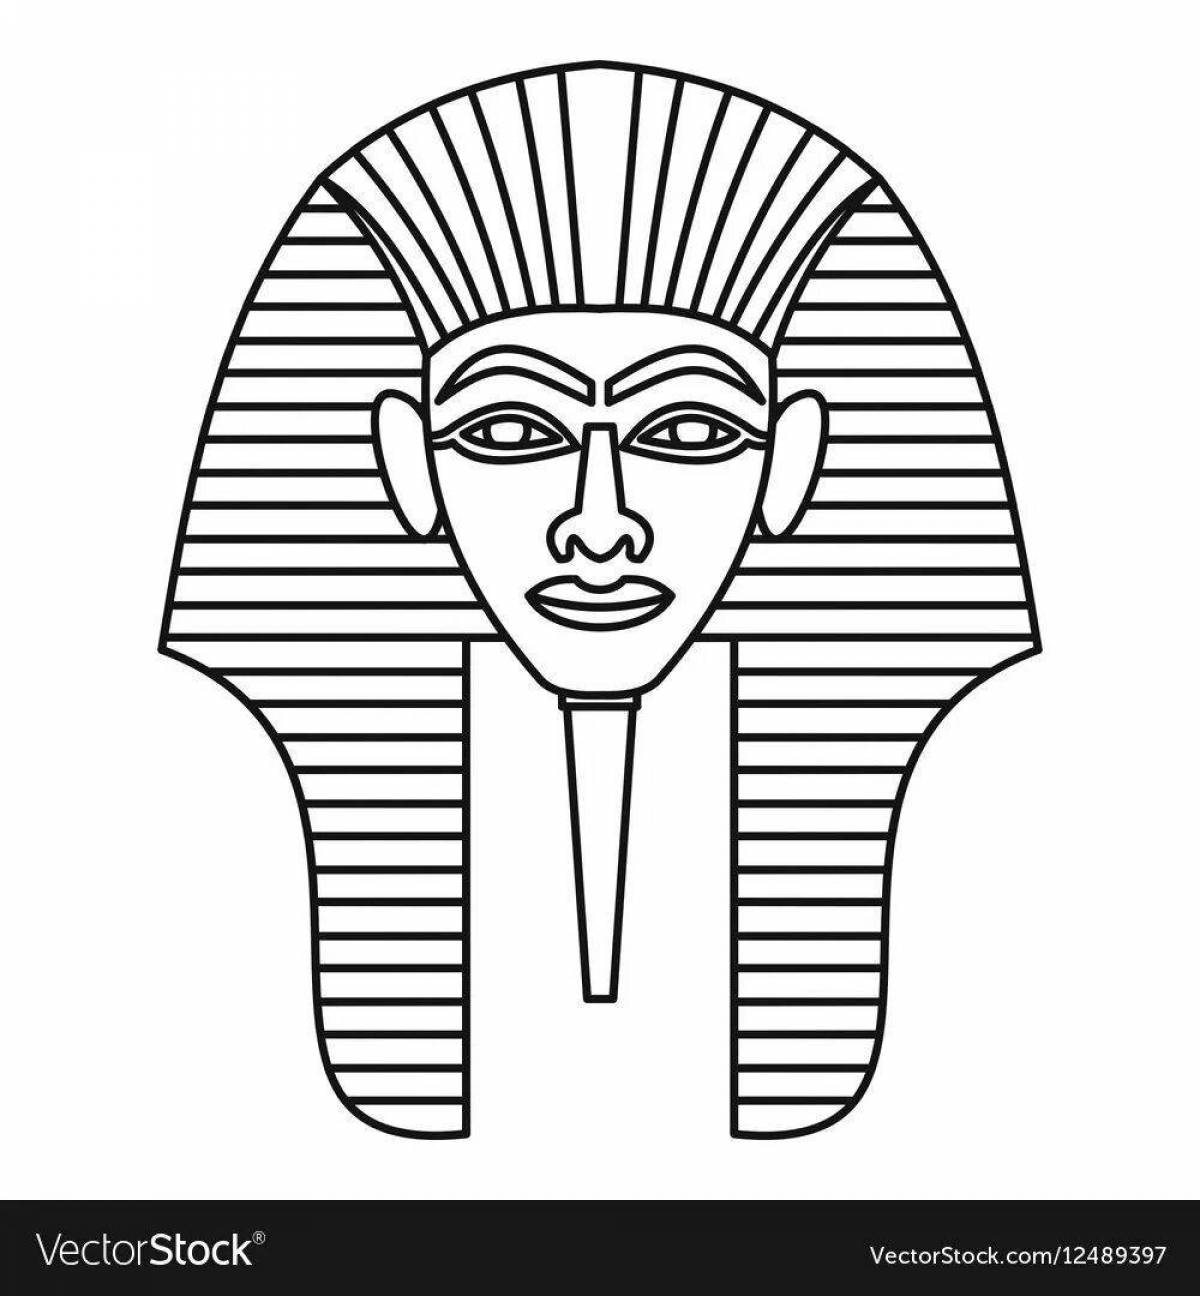 Coloring page unusual pharaoh mask